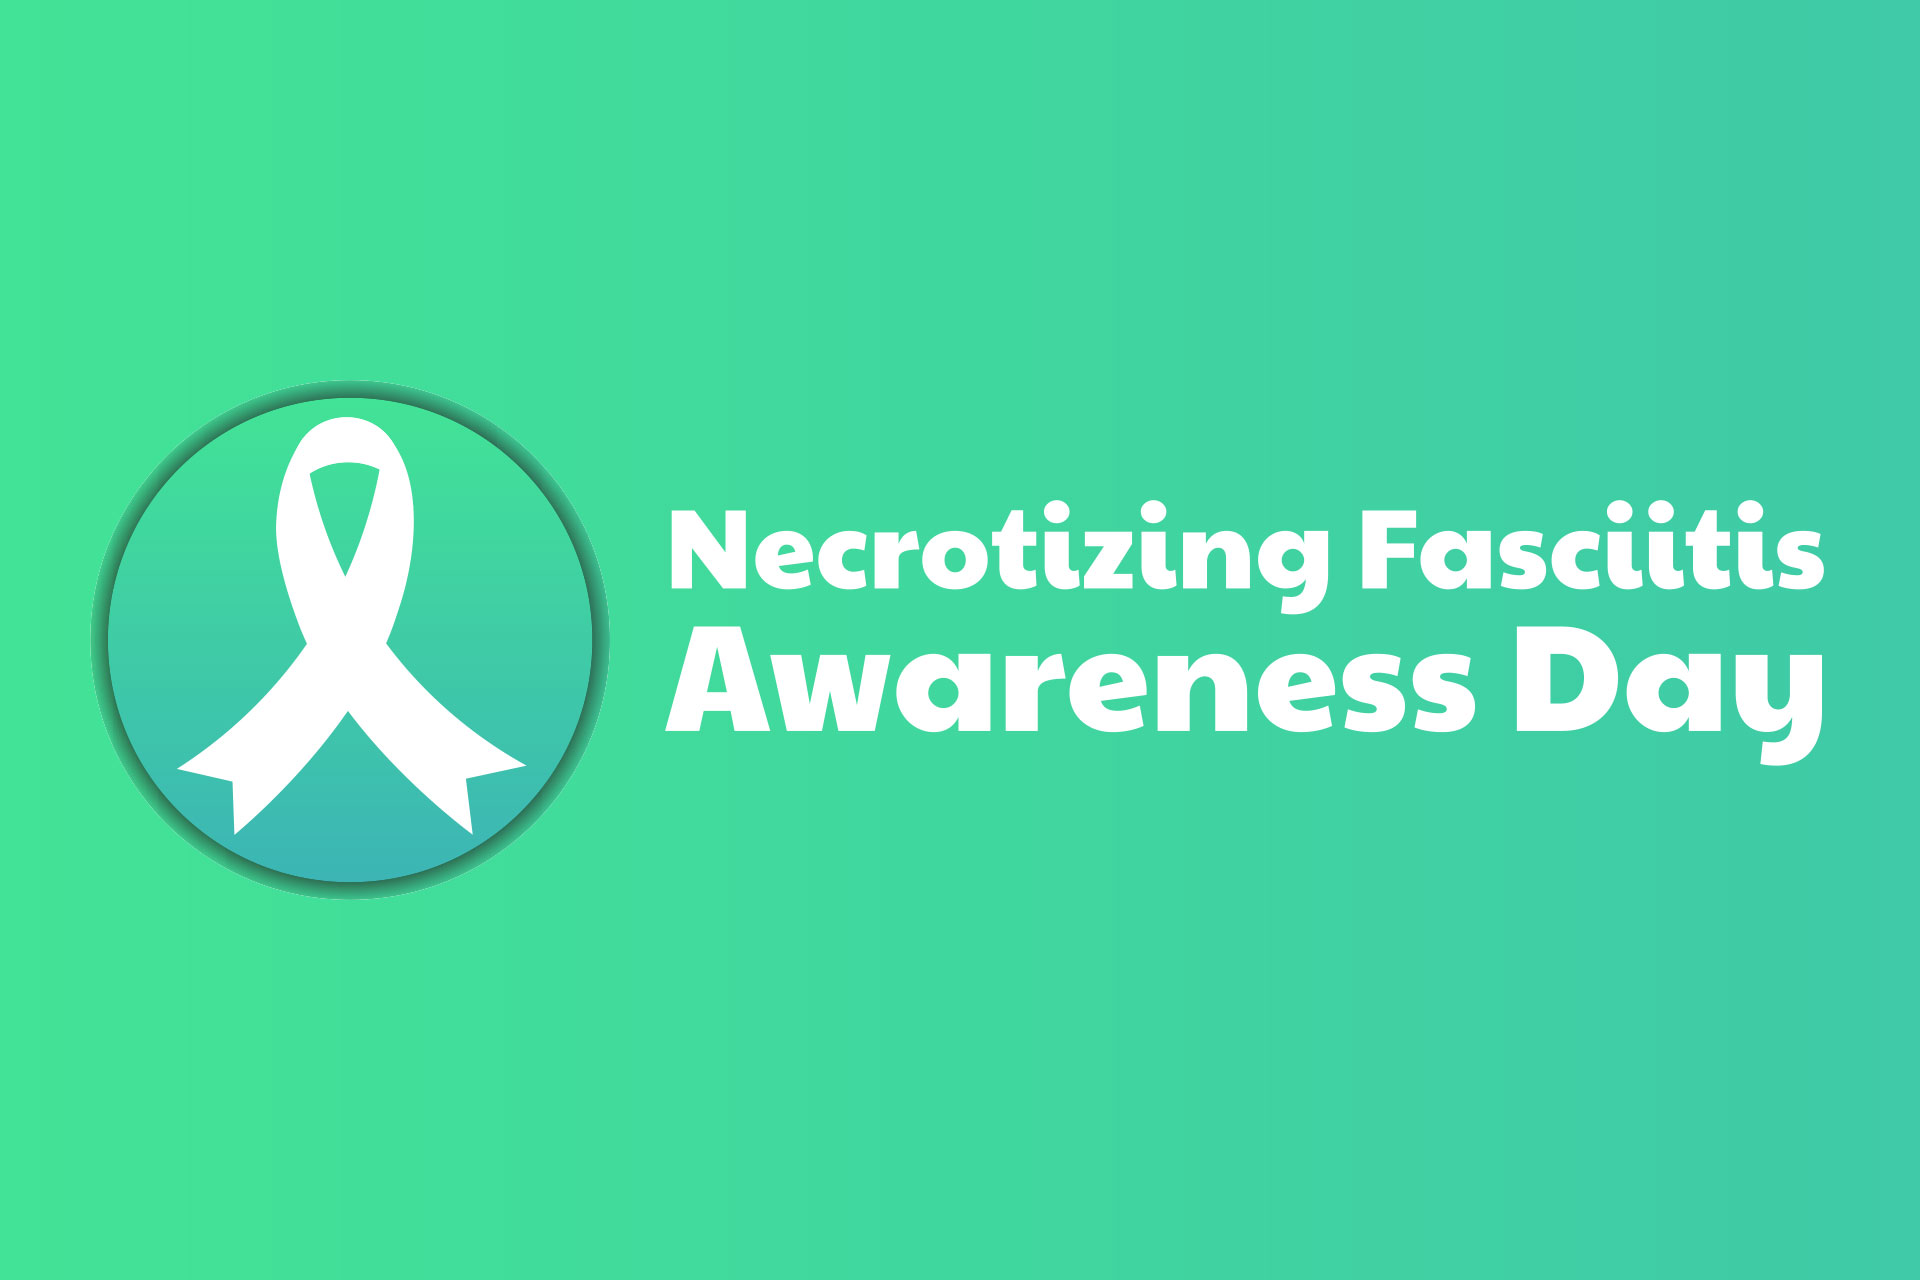 Necrotizing fasciitis awareness day